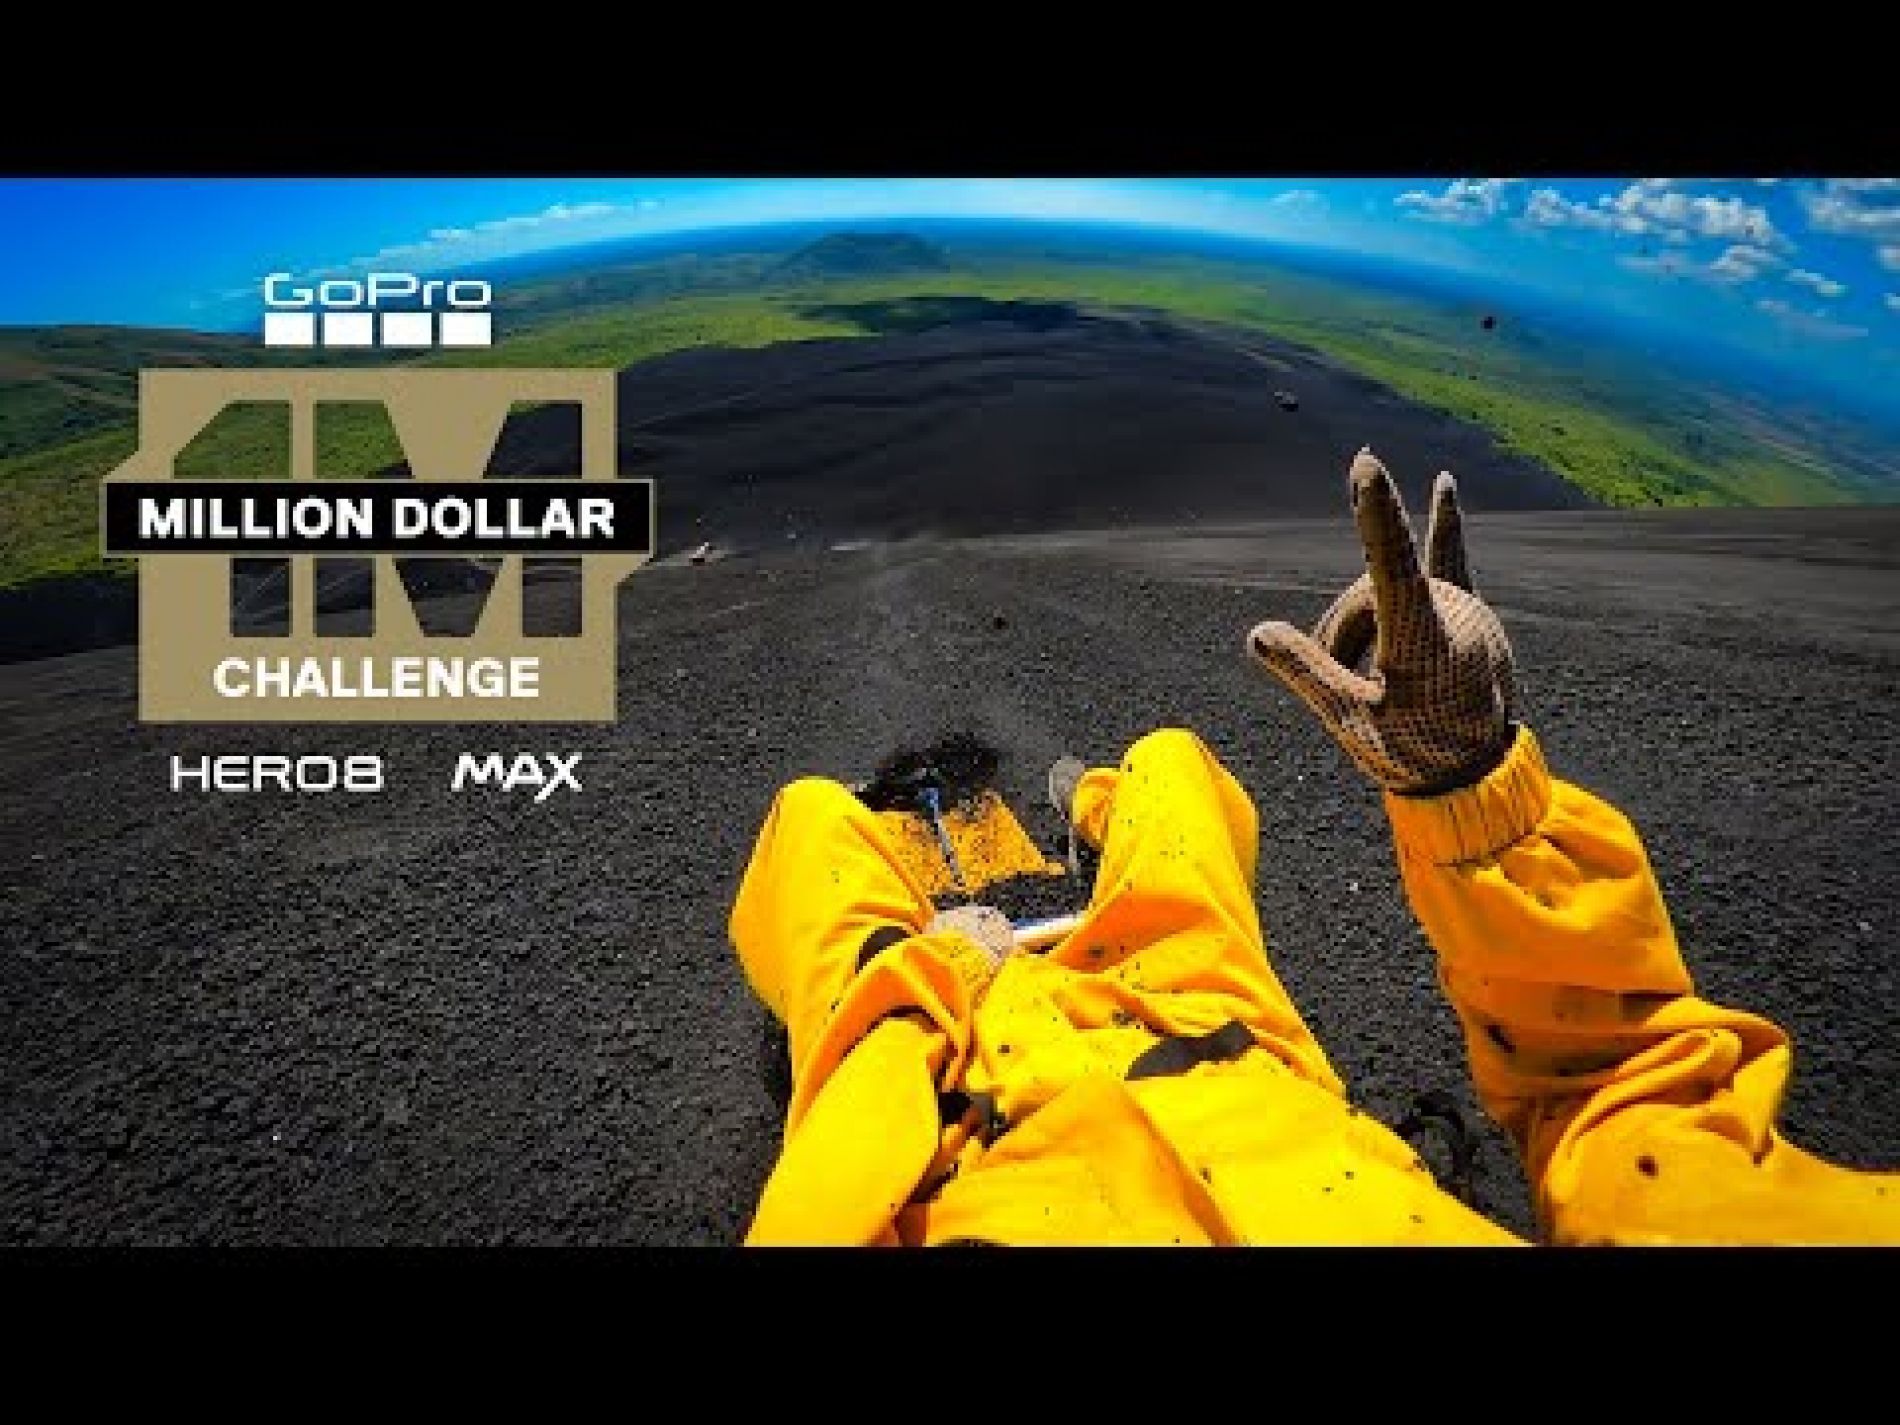 'Ava' by Garmiani in amazing GoPro 'Million $ challenge'  video!